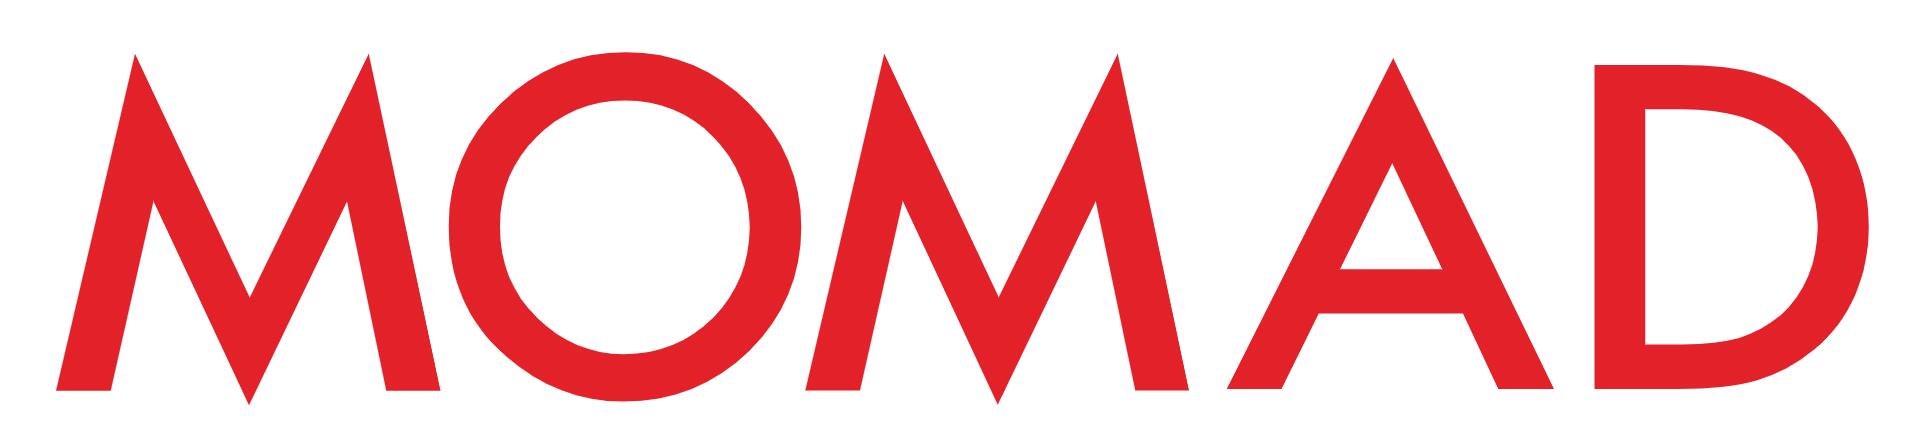 logo-momad-horizontal